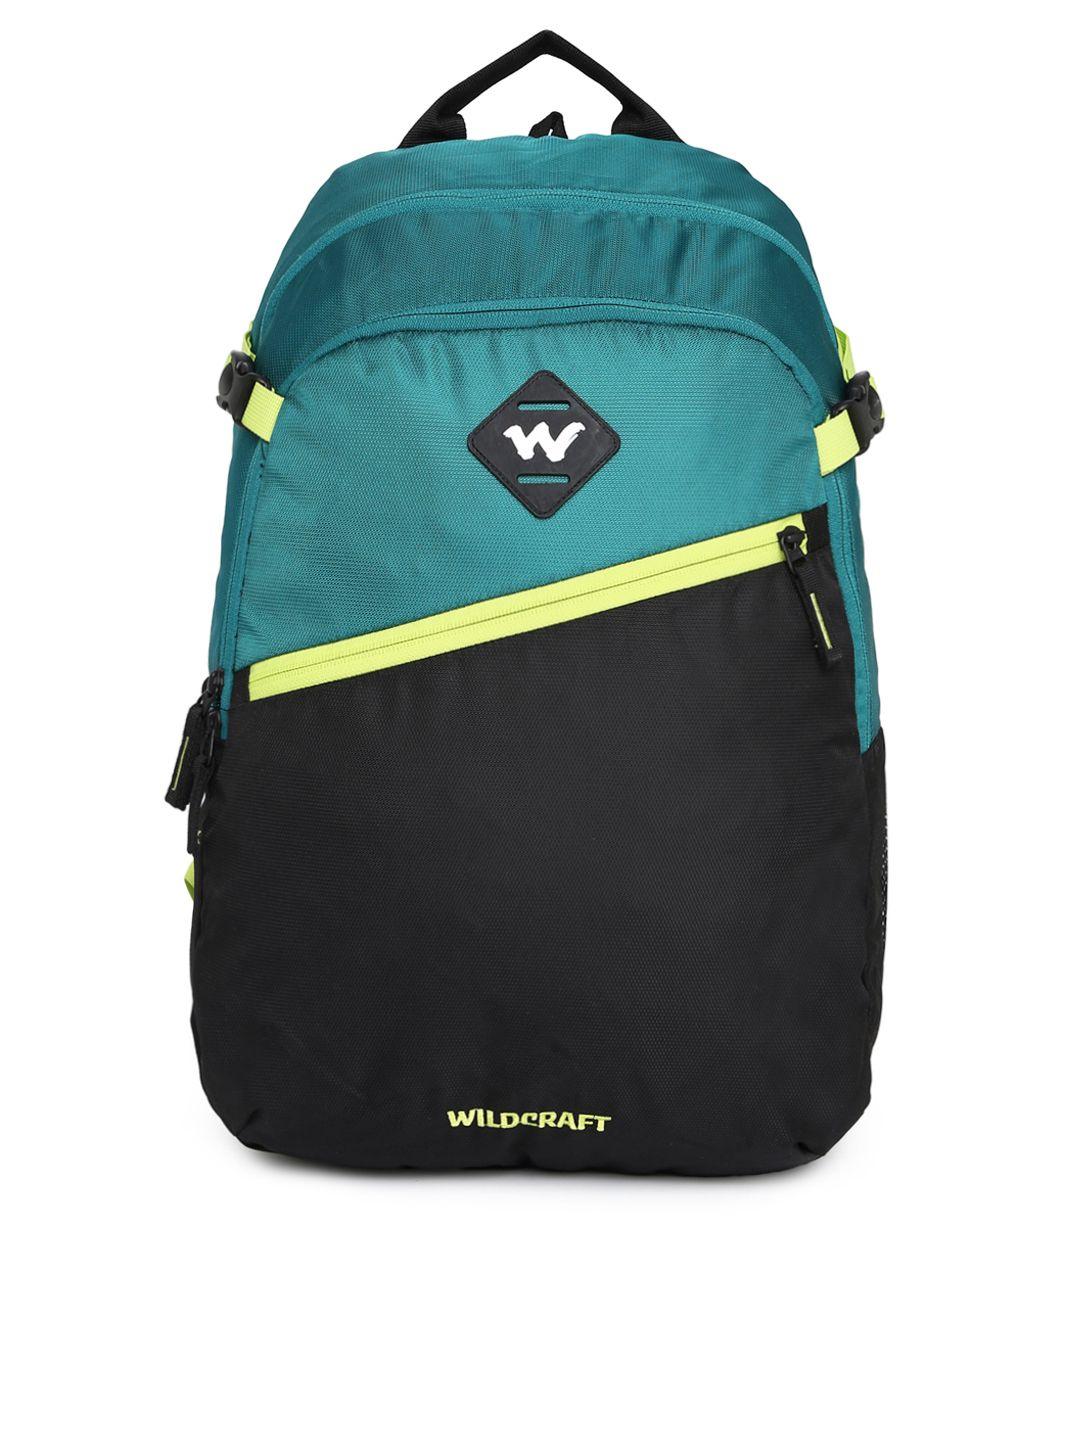 wildcraft unisex teal green & black colourblocked faber laptop backpack